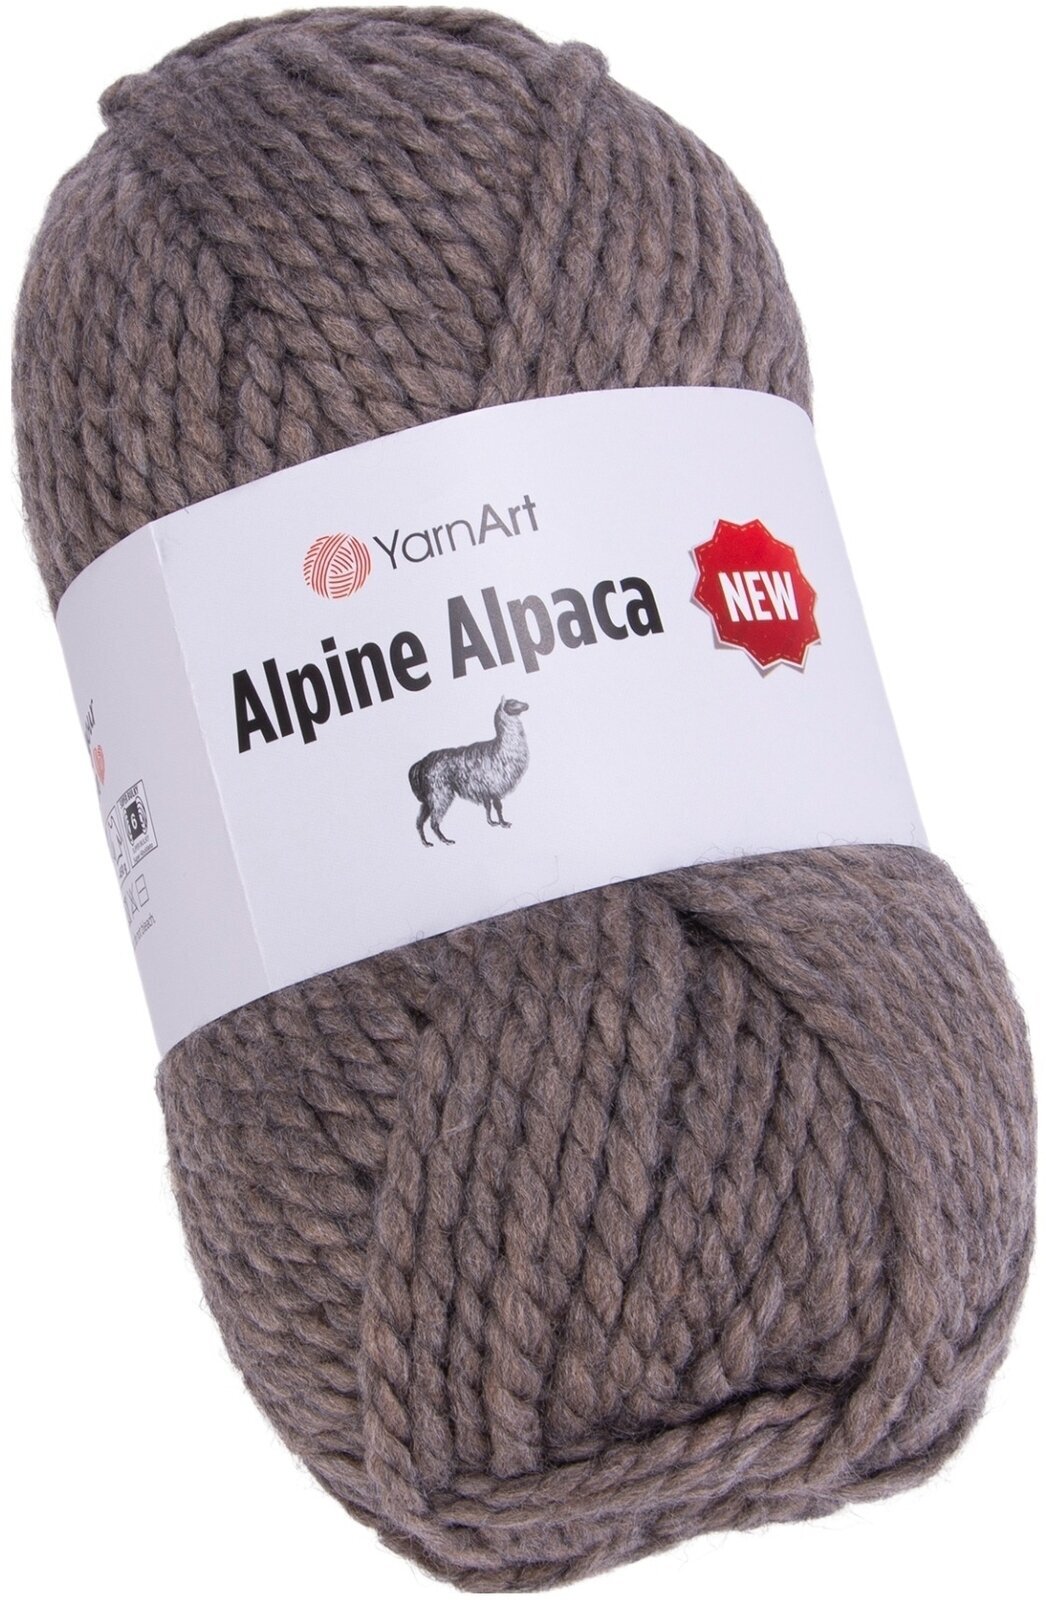 Breigaren Yarn Art Alpine Alpaca 1438